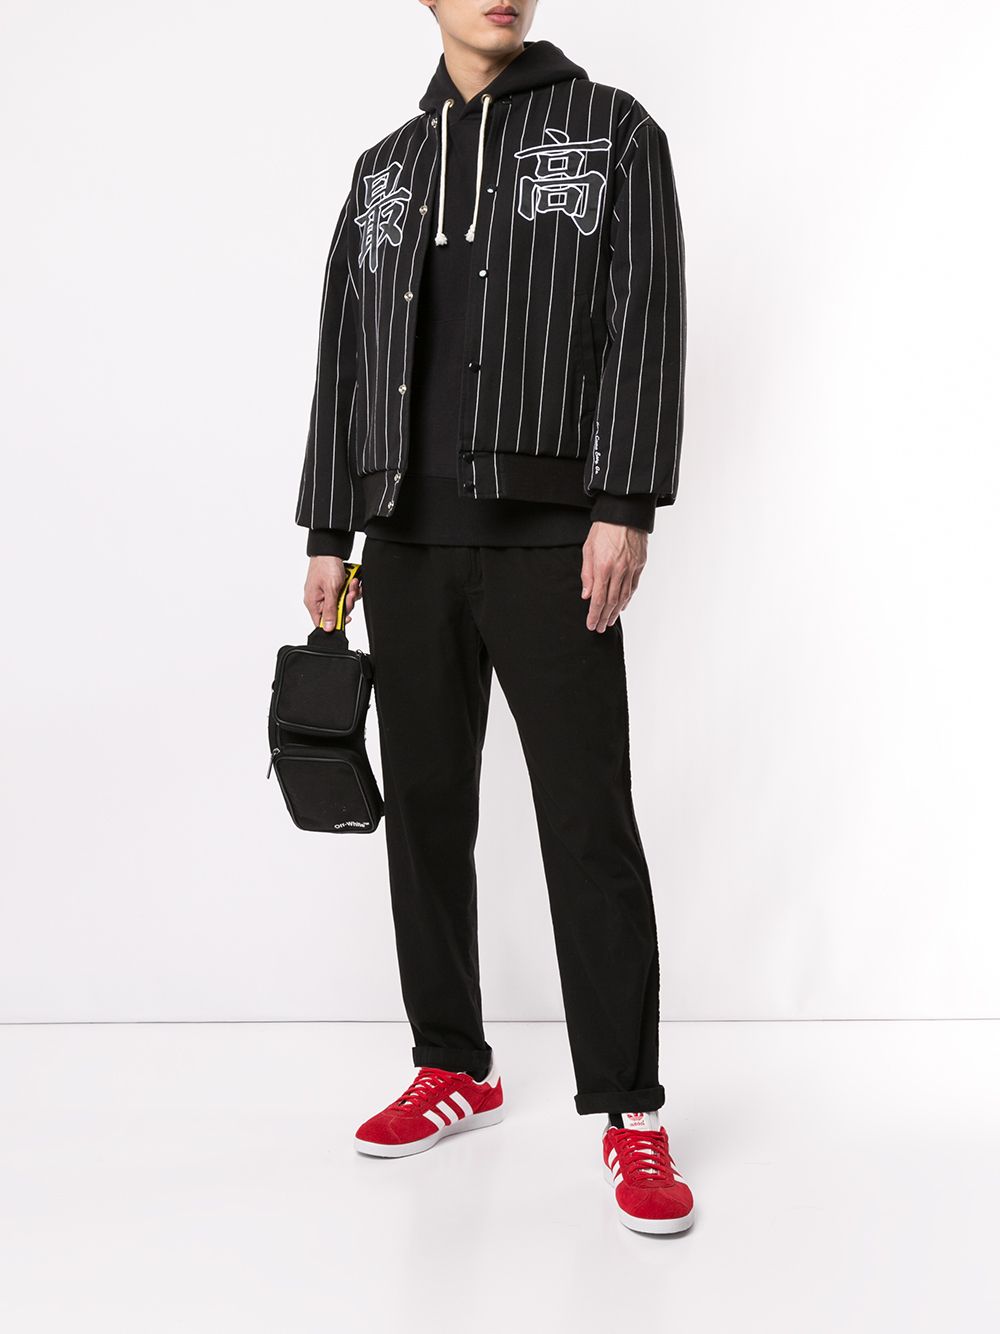 Shop black & white Supreme Pinstripe Varsity SS19 jacket with Express ...